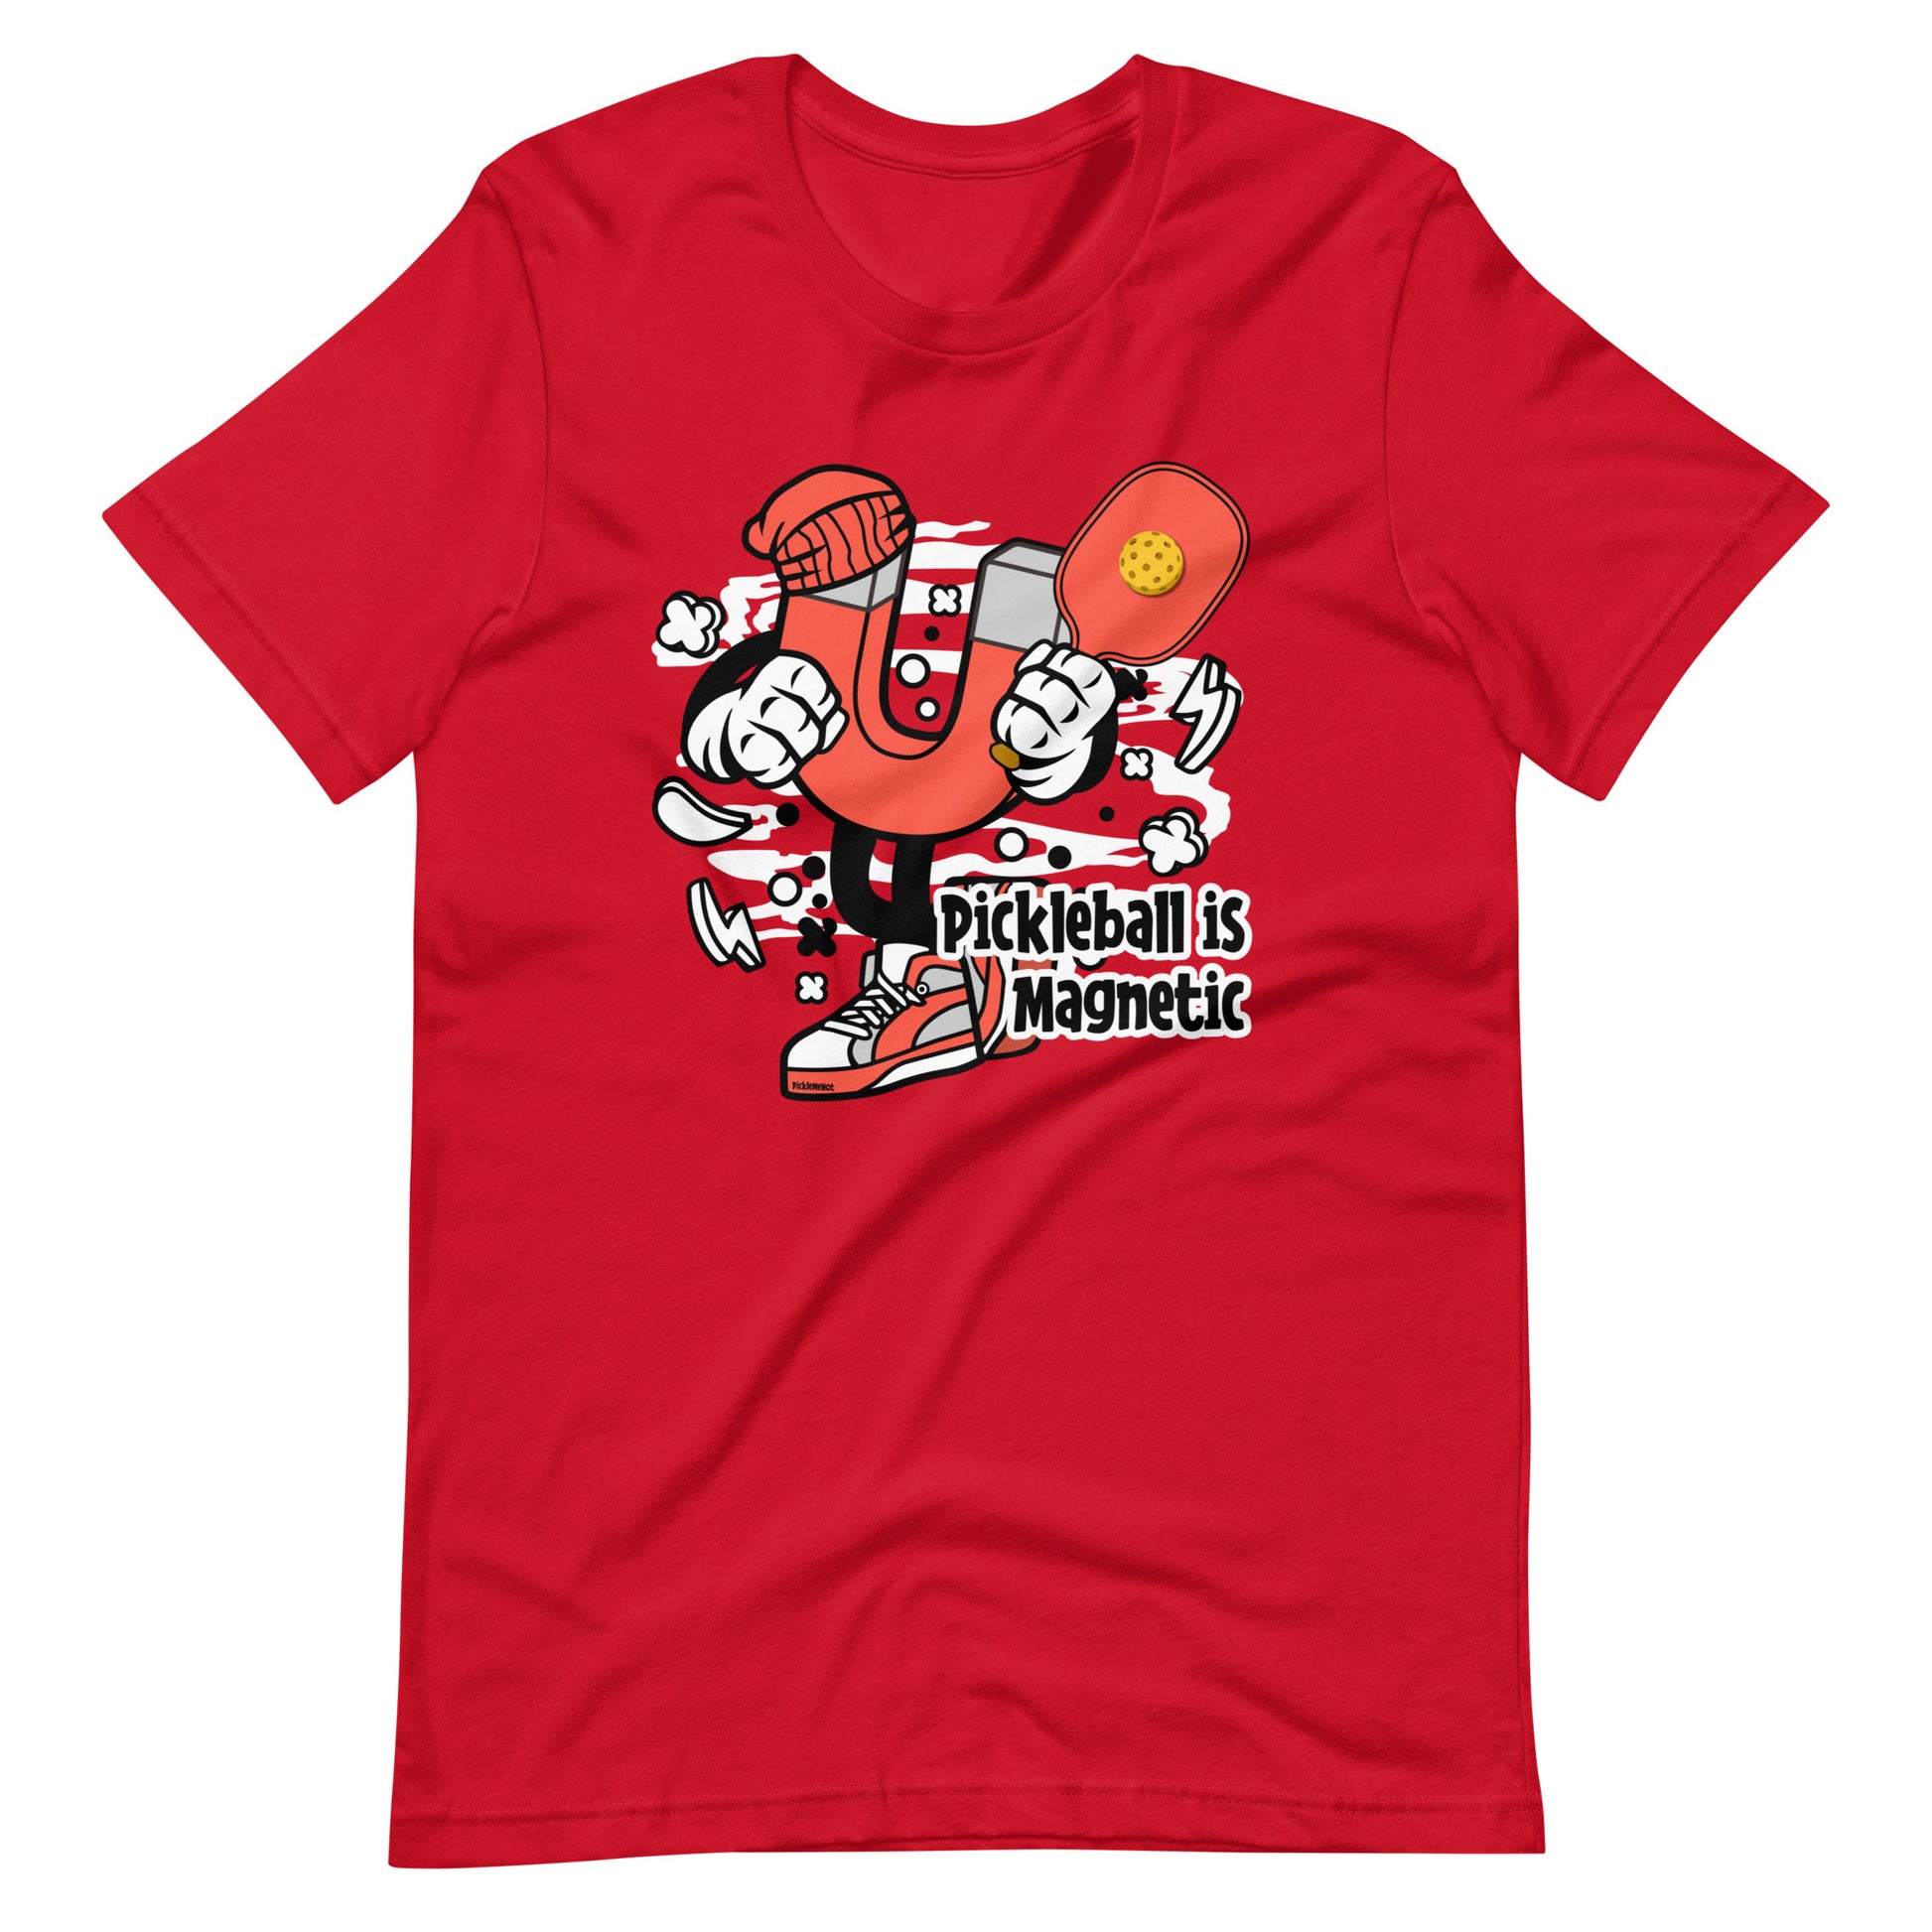 Retro-Vintage Fun Pickleball , "Pickleball is Magnetic" Unisex Women's Cardinal Red T-Shirt